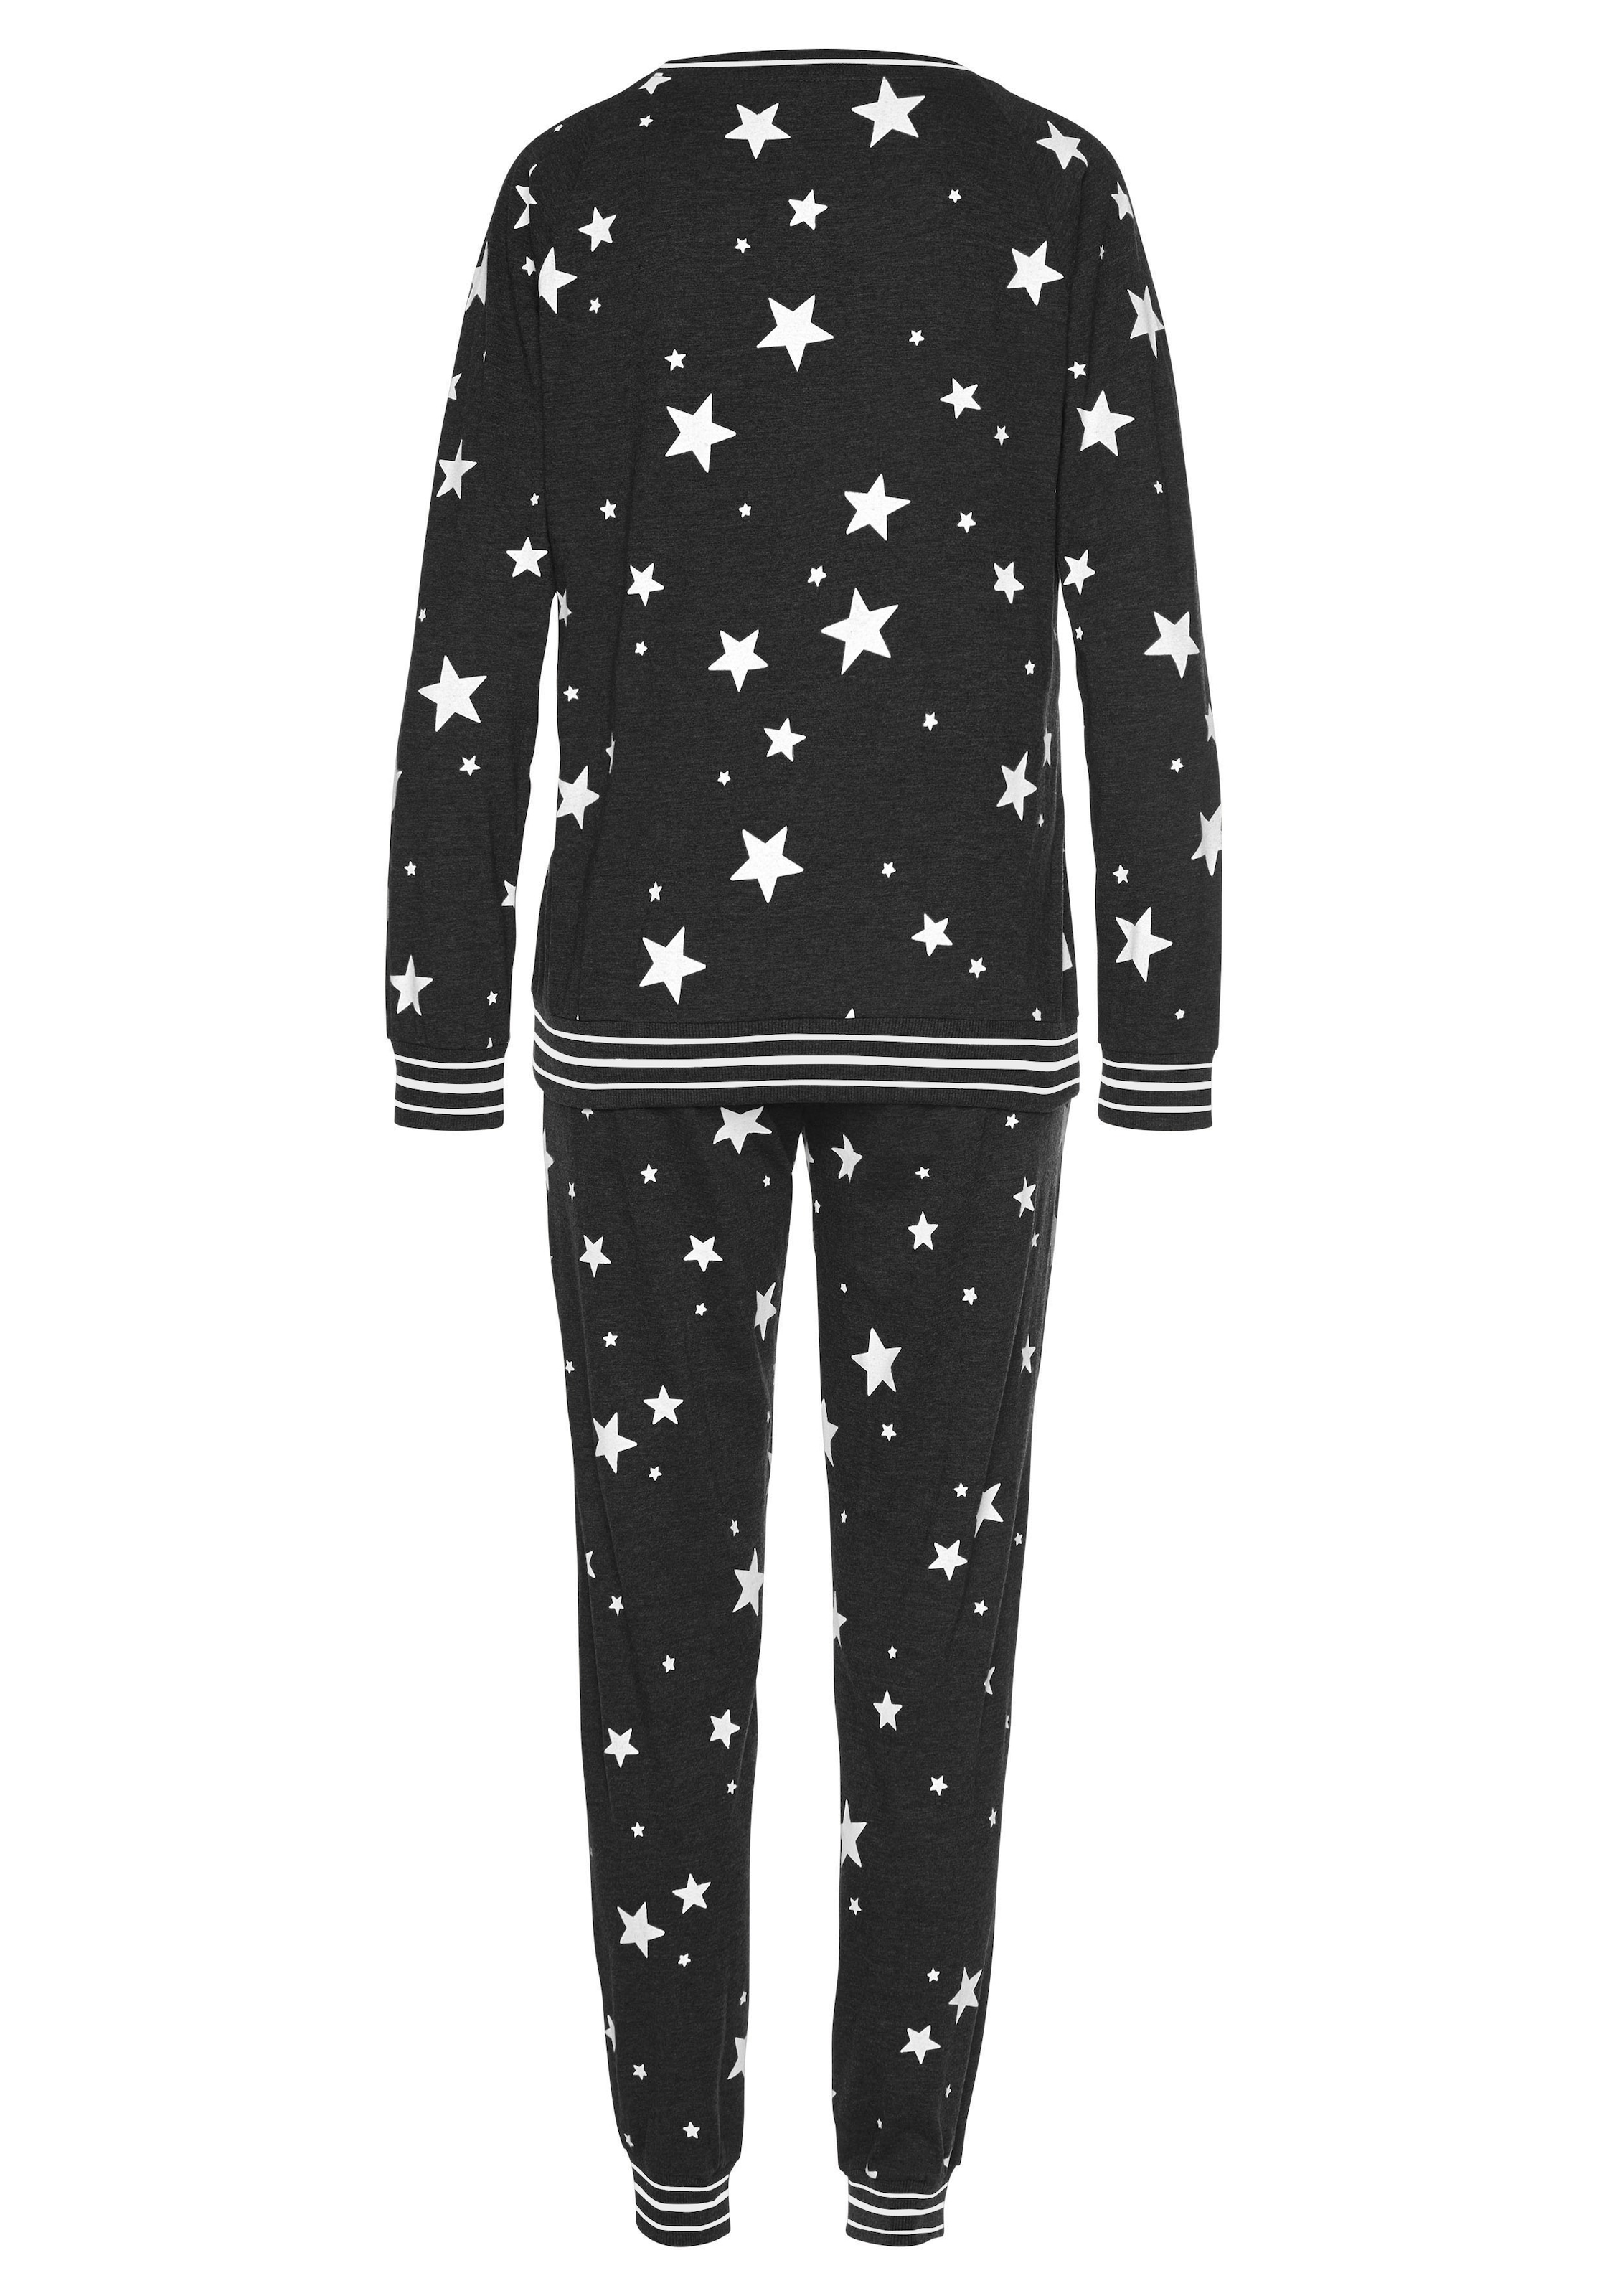 günstig mit Sternedruck Dreams kaufen Vivance Pyjama,